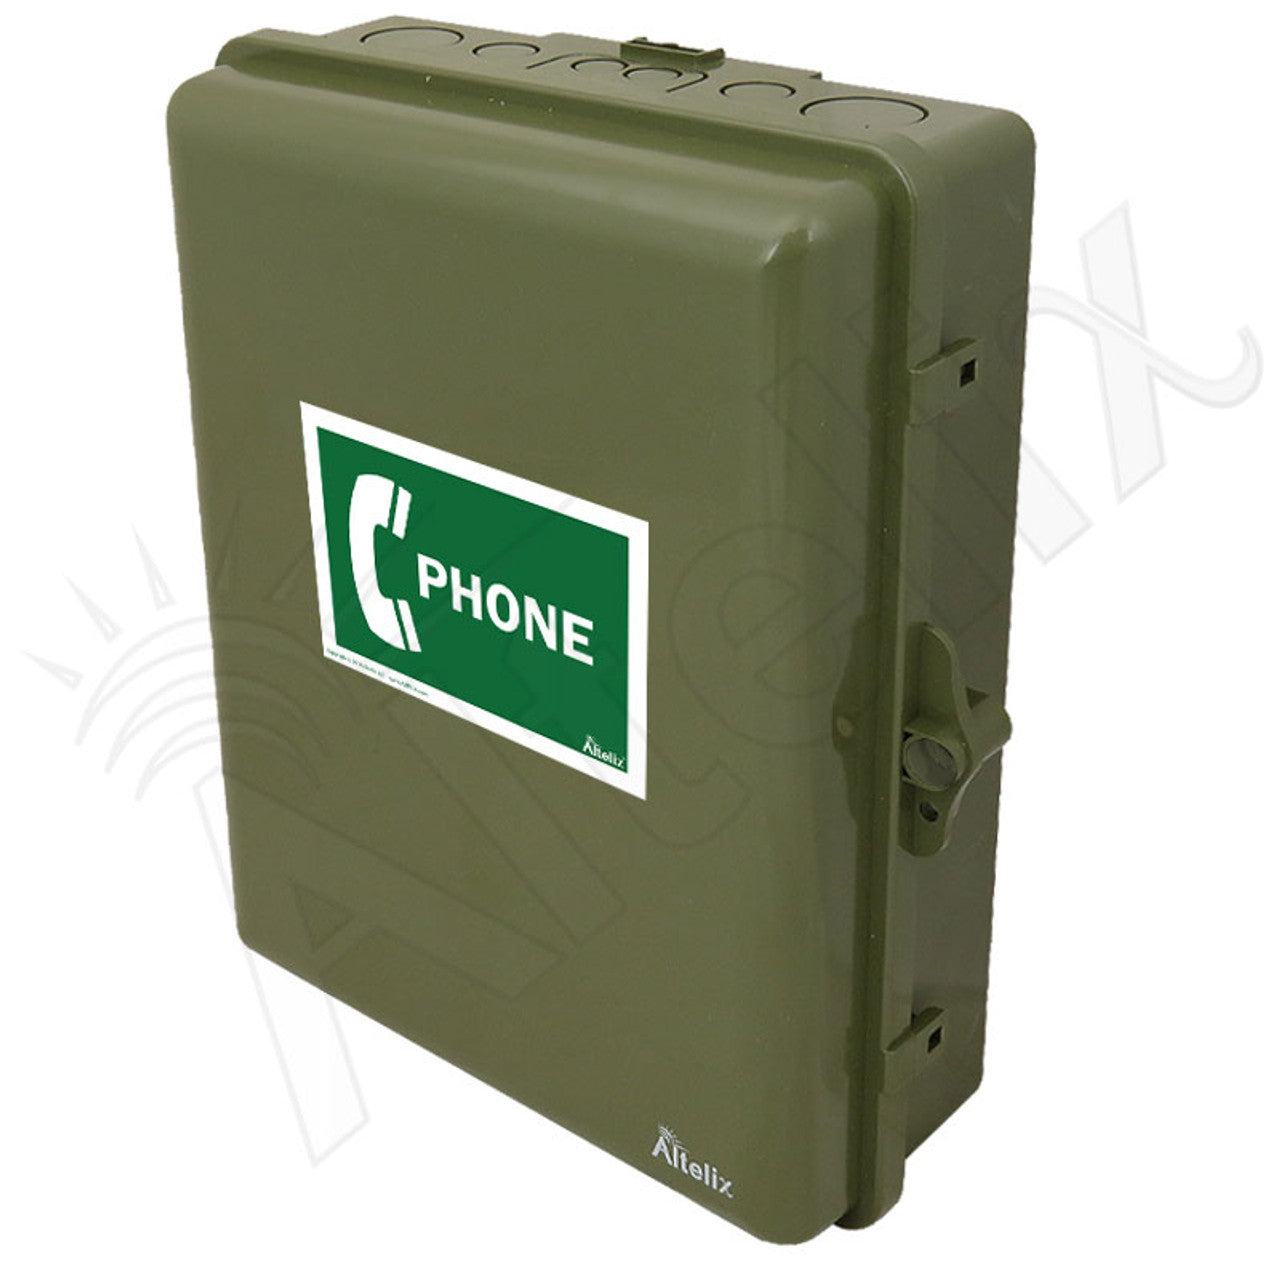 Buy green Altelix Outdoor Weatherproof Phone Call Box for Slim-Line Phones, 14x11x5 with Phone Label